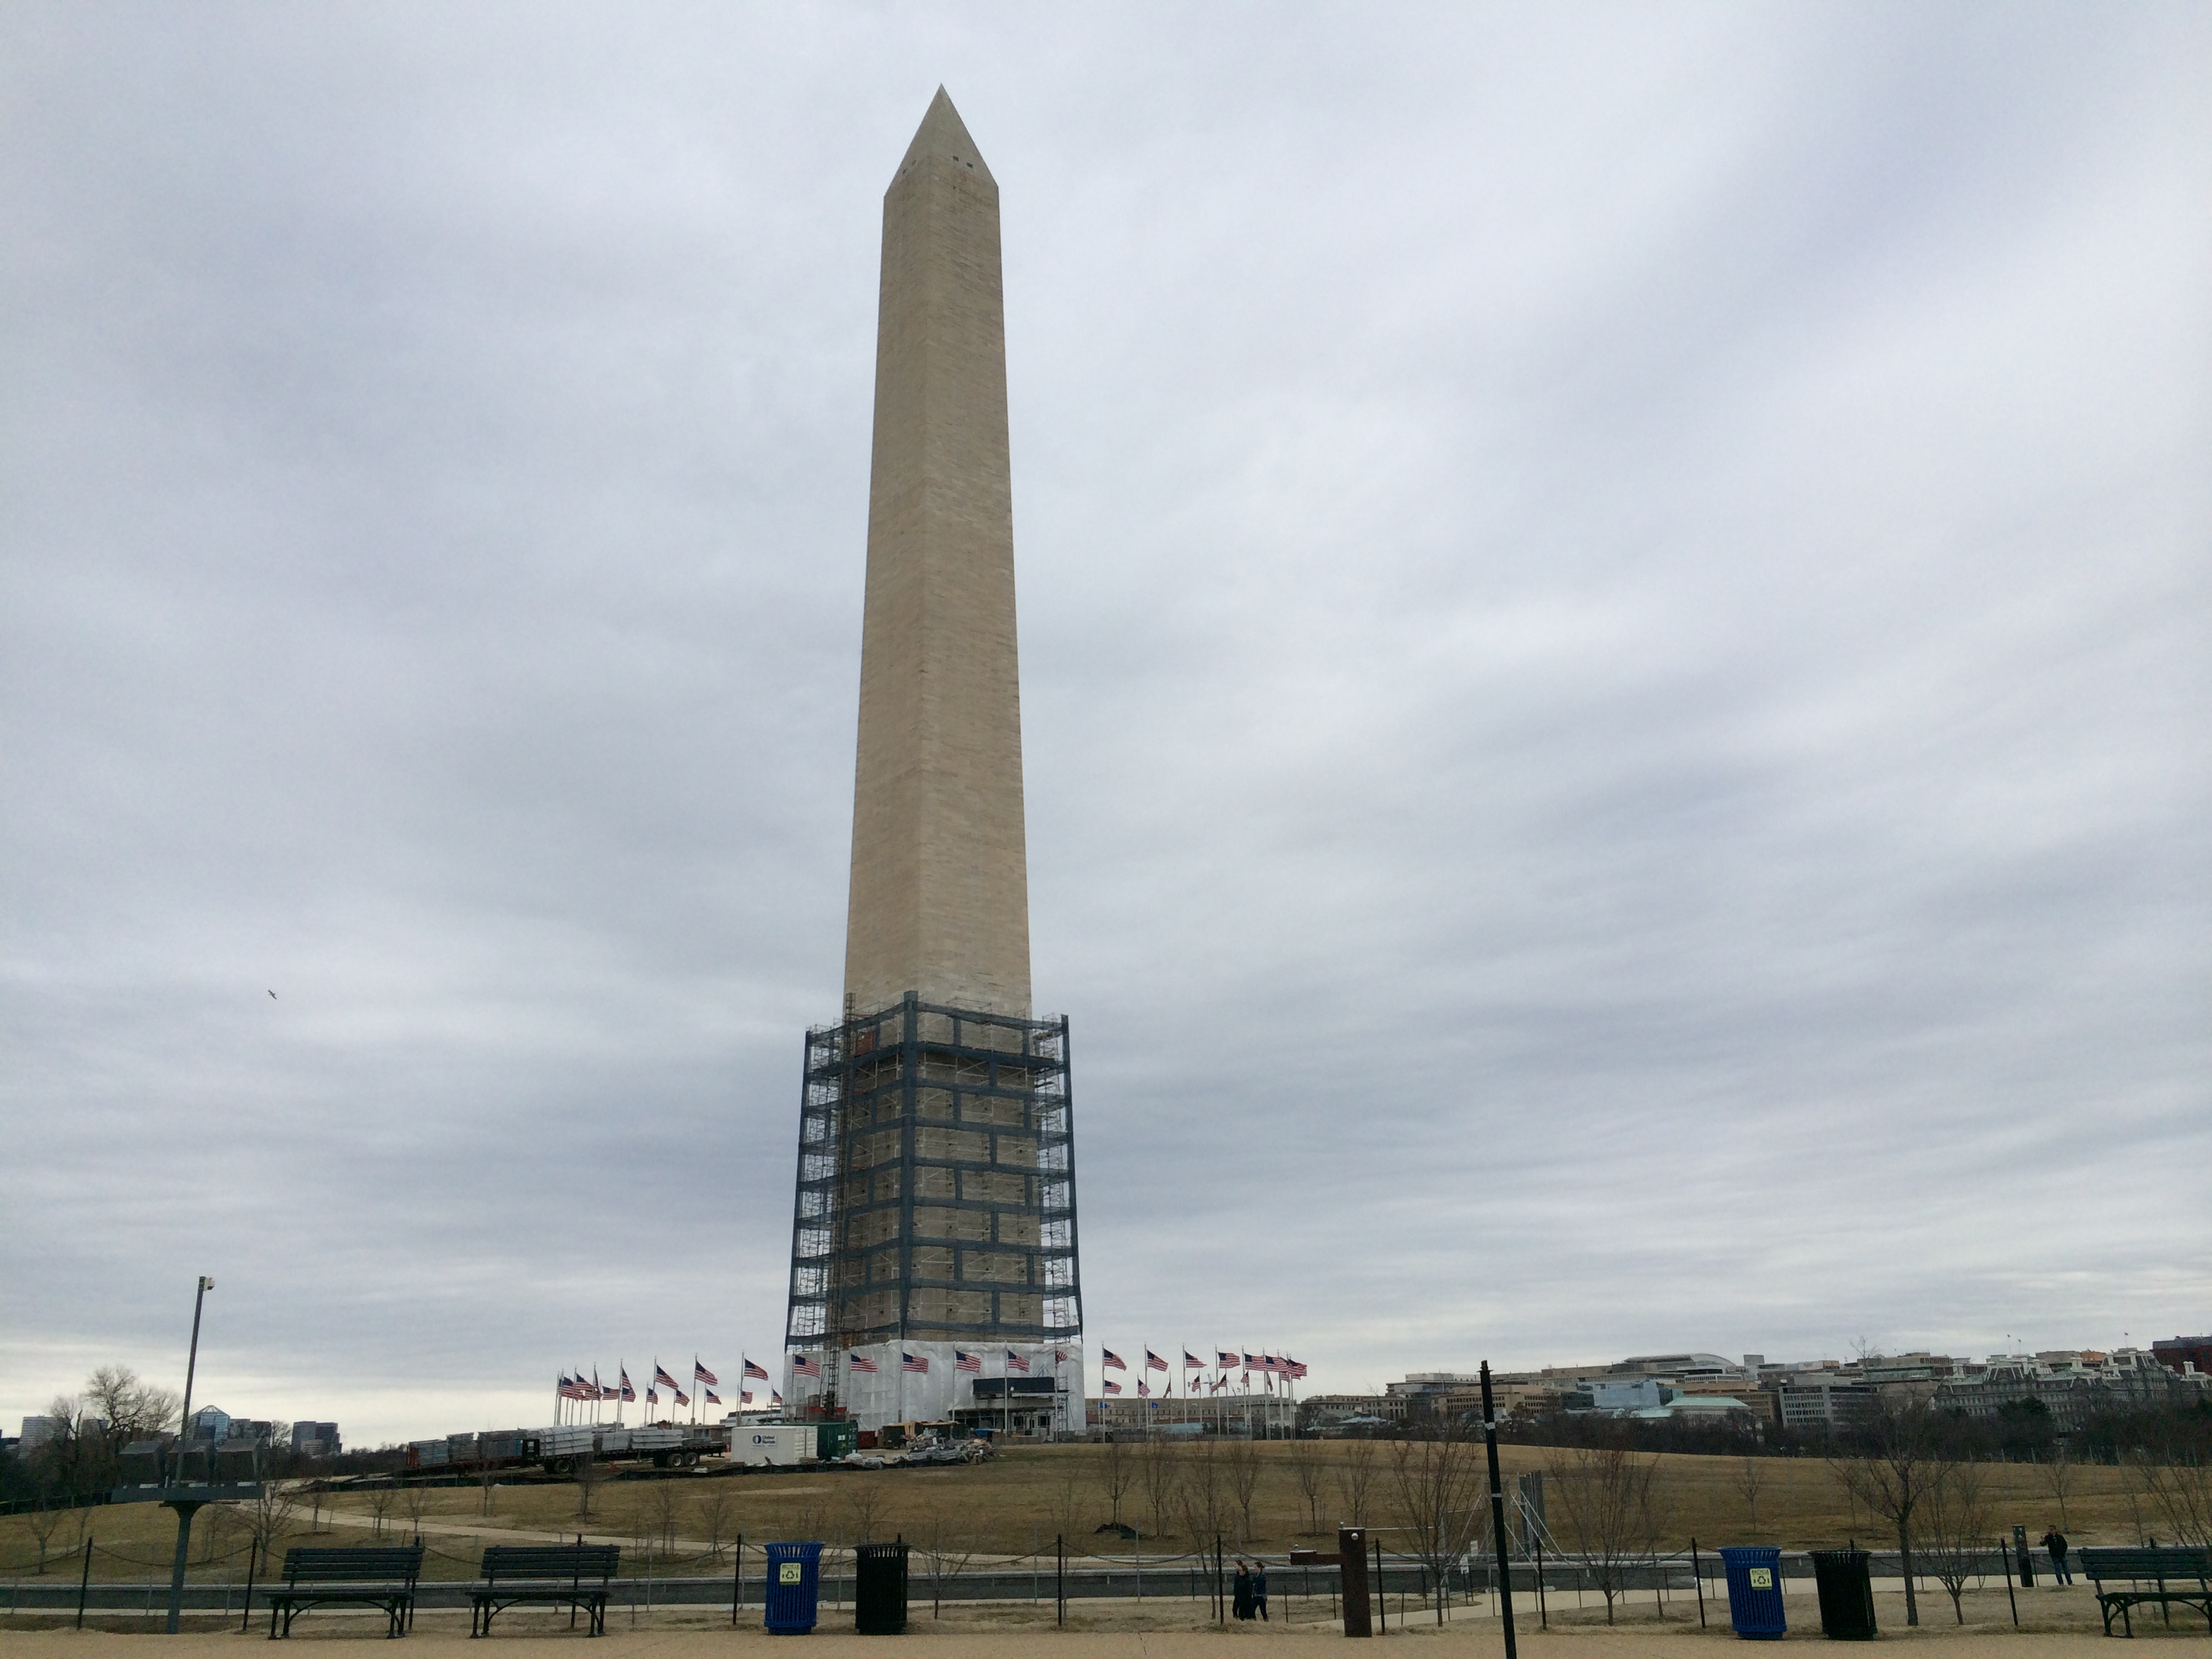 Washington Monument construction continues